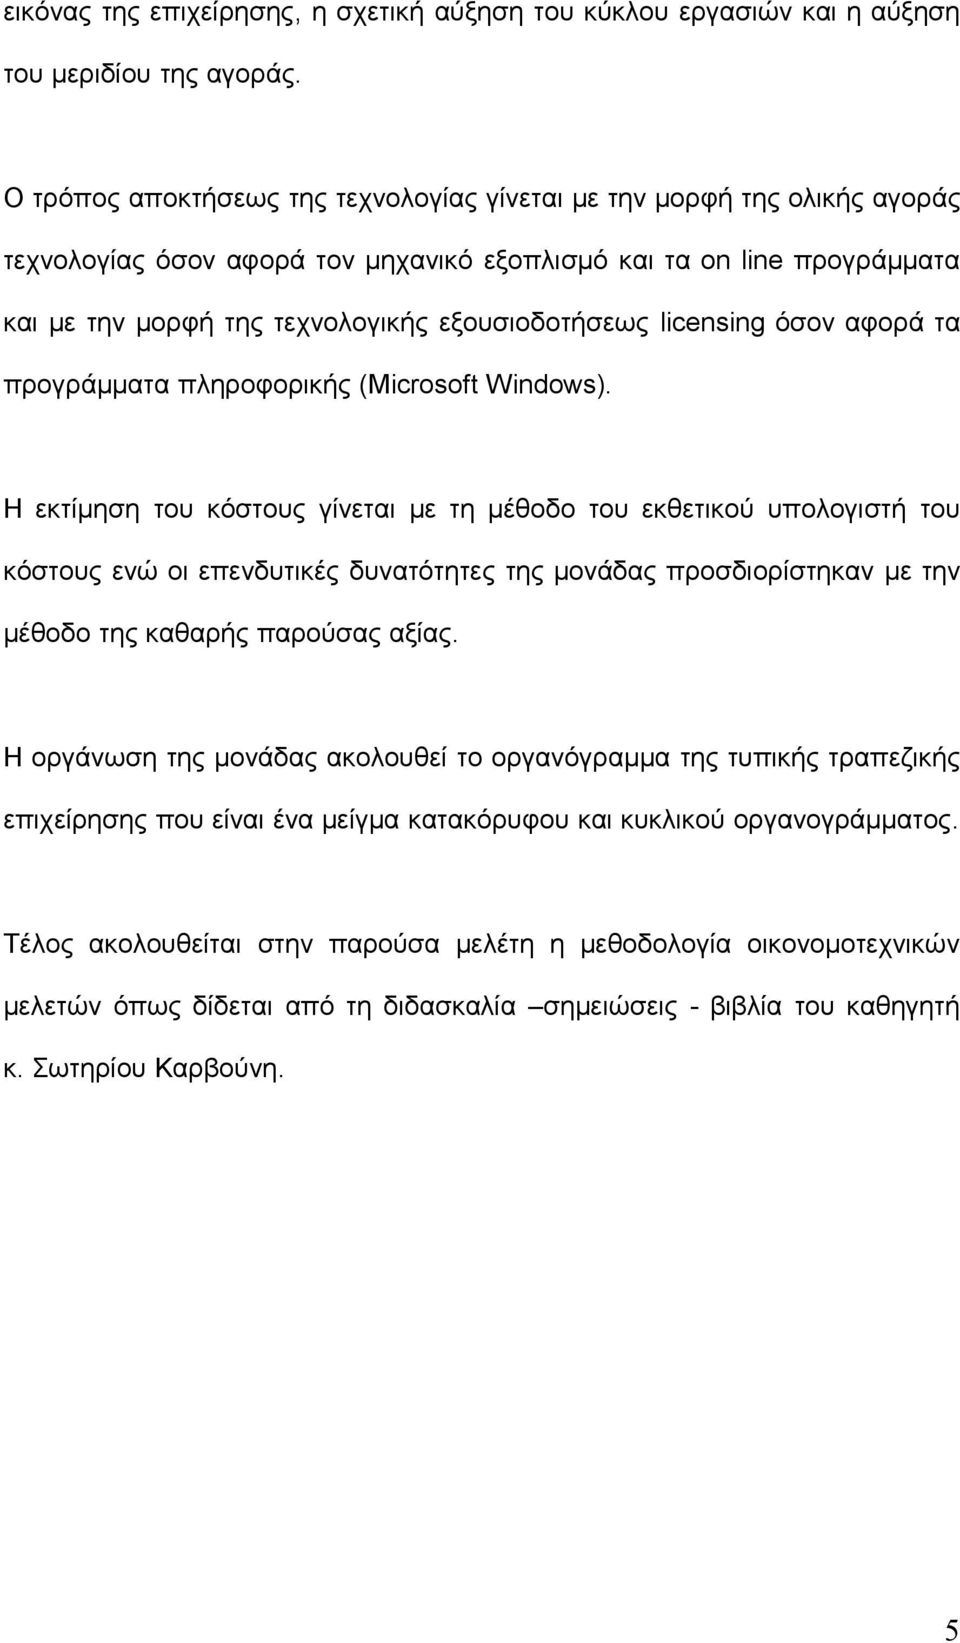 licensing όσον αφορά τα προγράμματα πληροφορικής (Microsoft Windows).